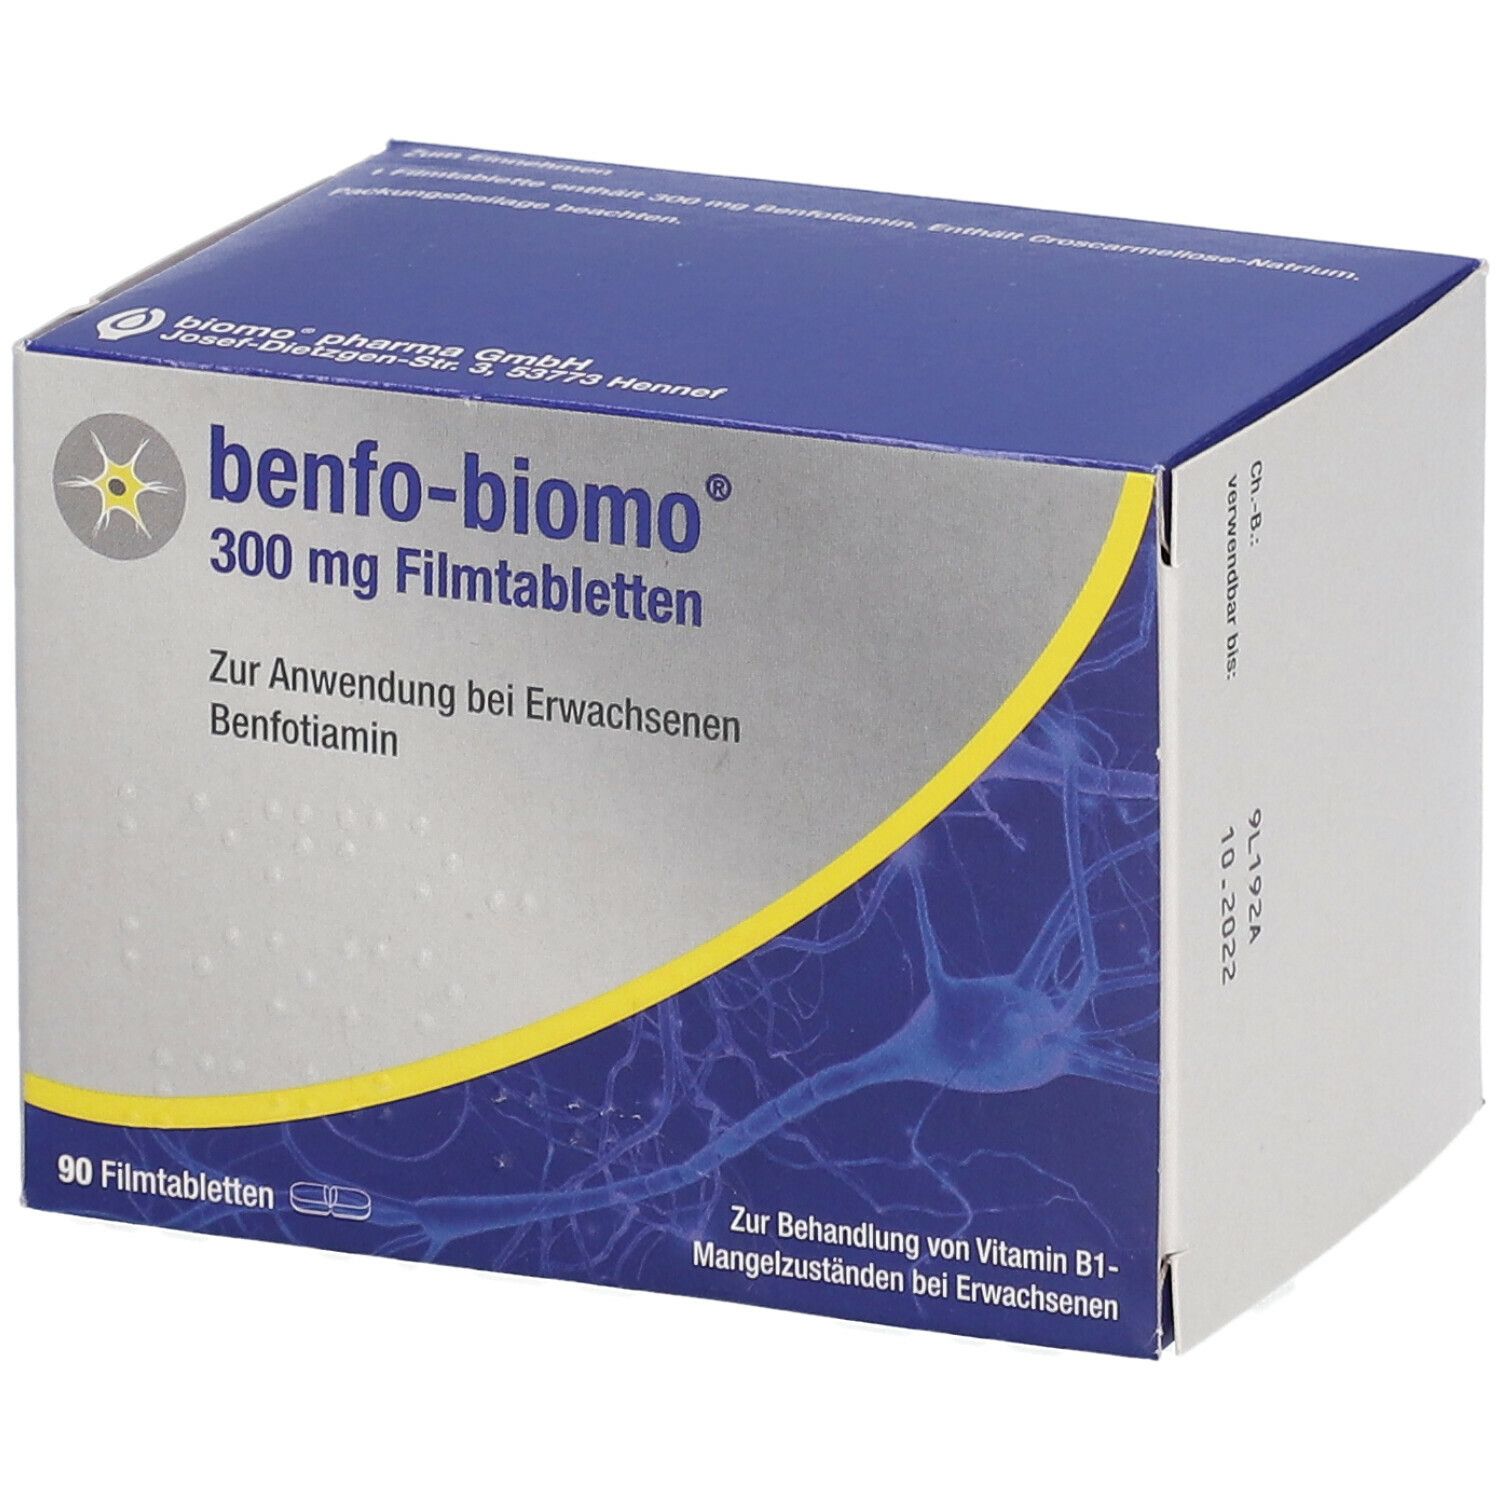 benfo-biomo 300 mg Filmtabletten